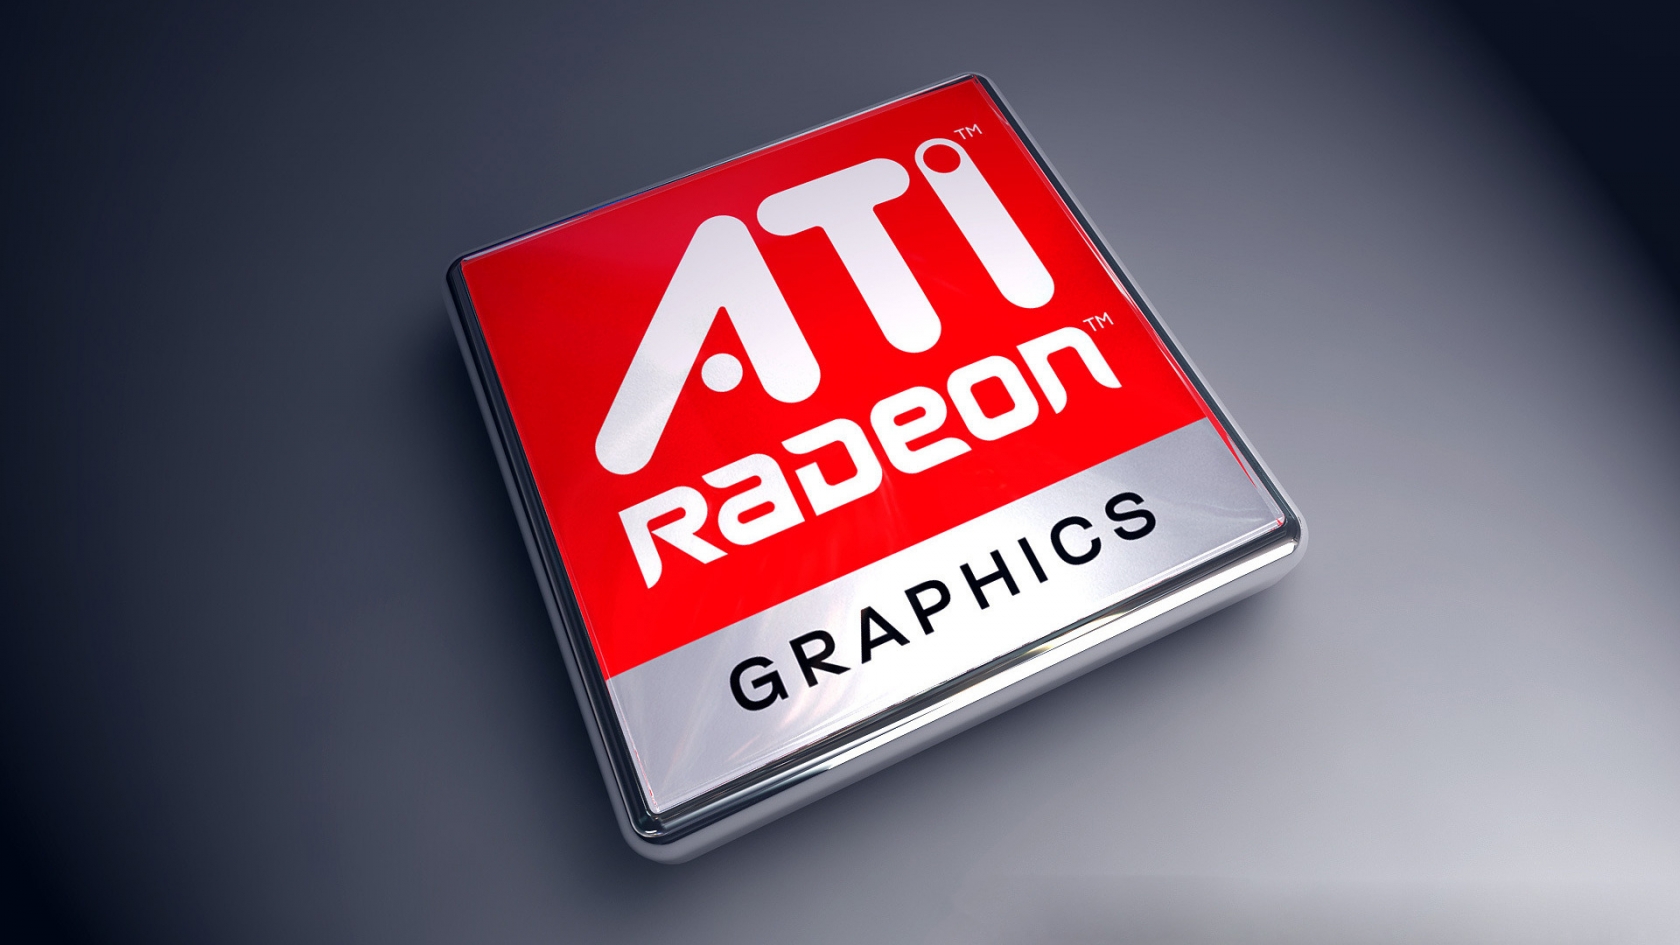 ATI Radeon Graphics for 1680 x 945 HDTV resolution